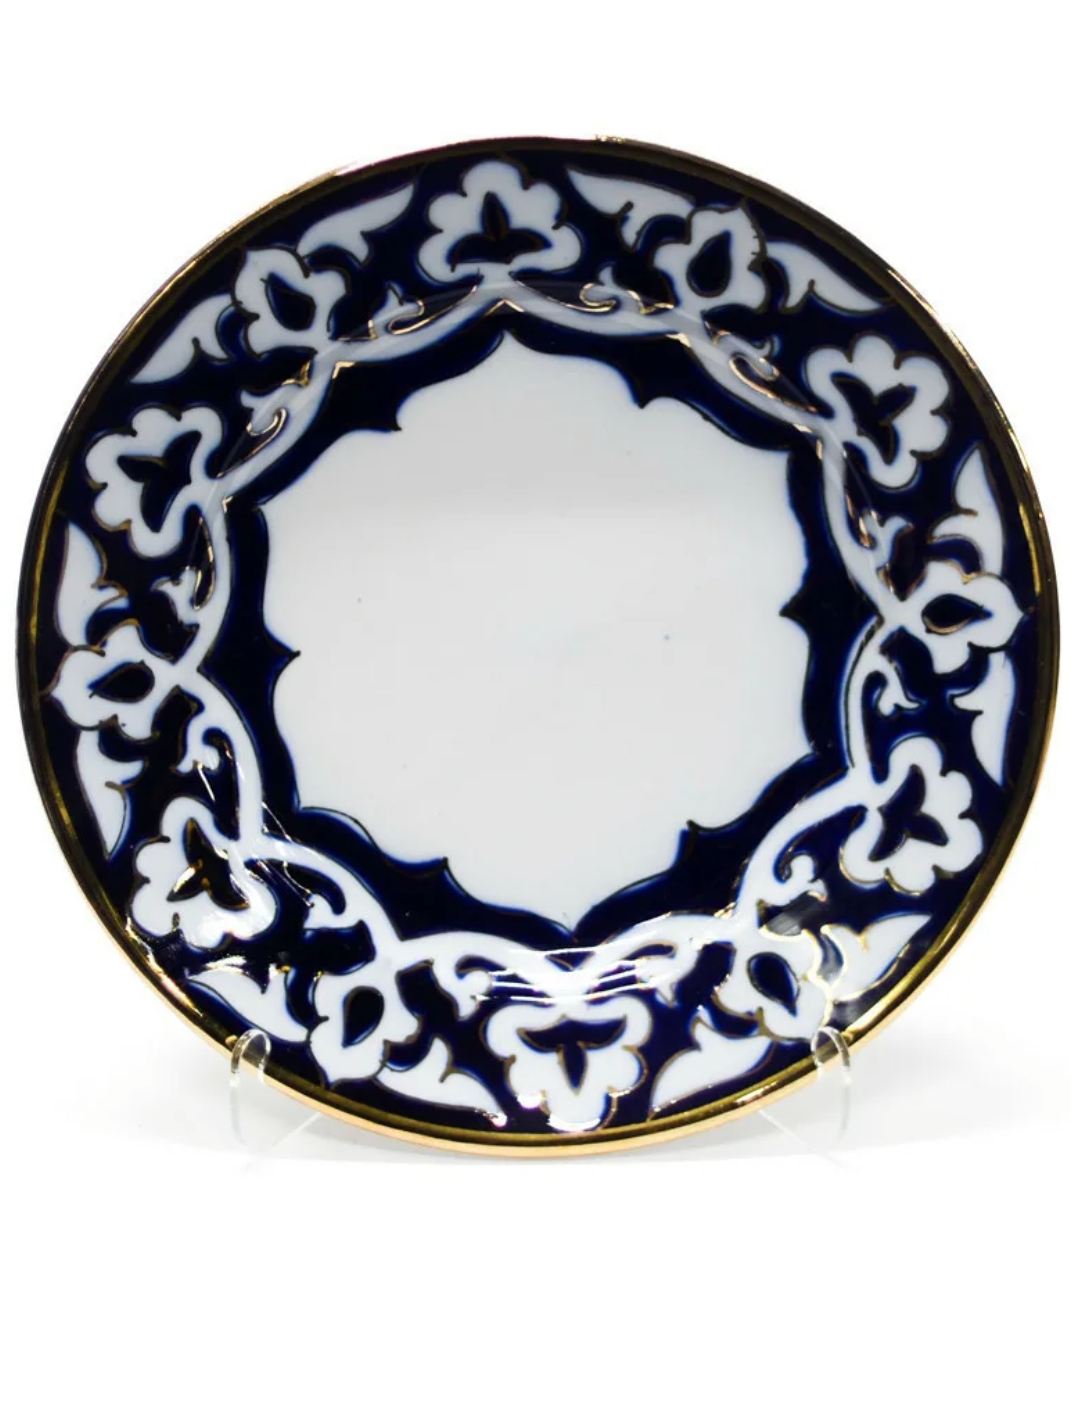 Узбекская посуда пахта Гулли. Тарелка "пахта" керамика, 28 см.. Узбекская посуда пахта тарелка. Узбекская посуда Риштанская керамика. Посуда хлопок